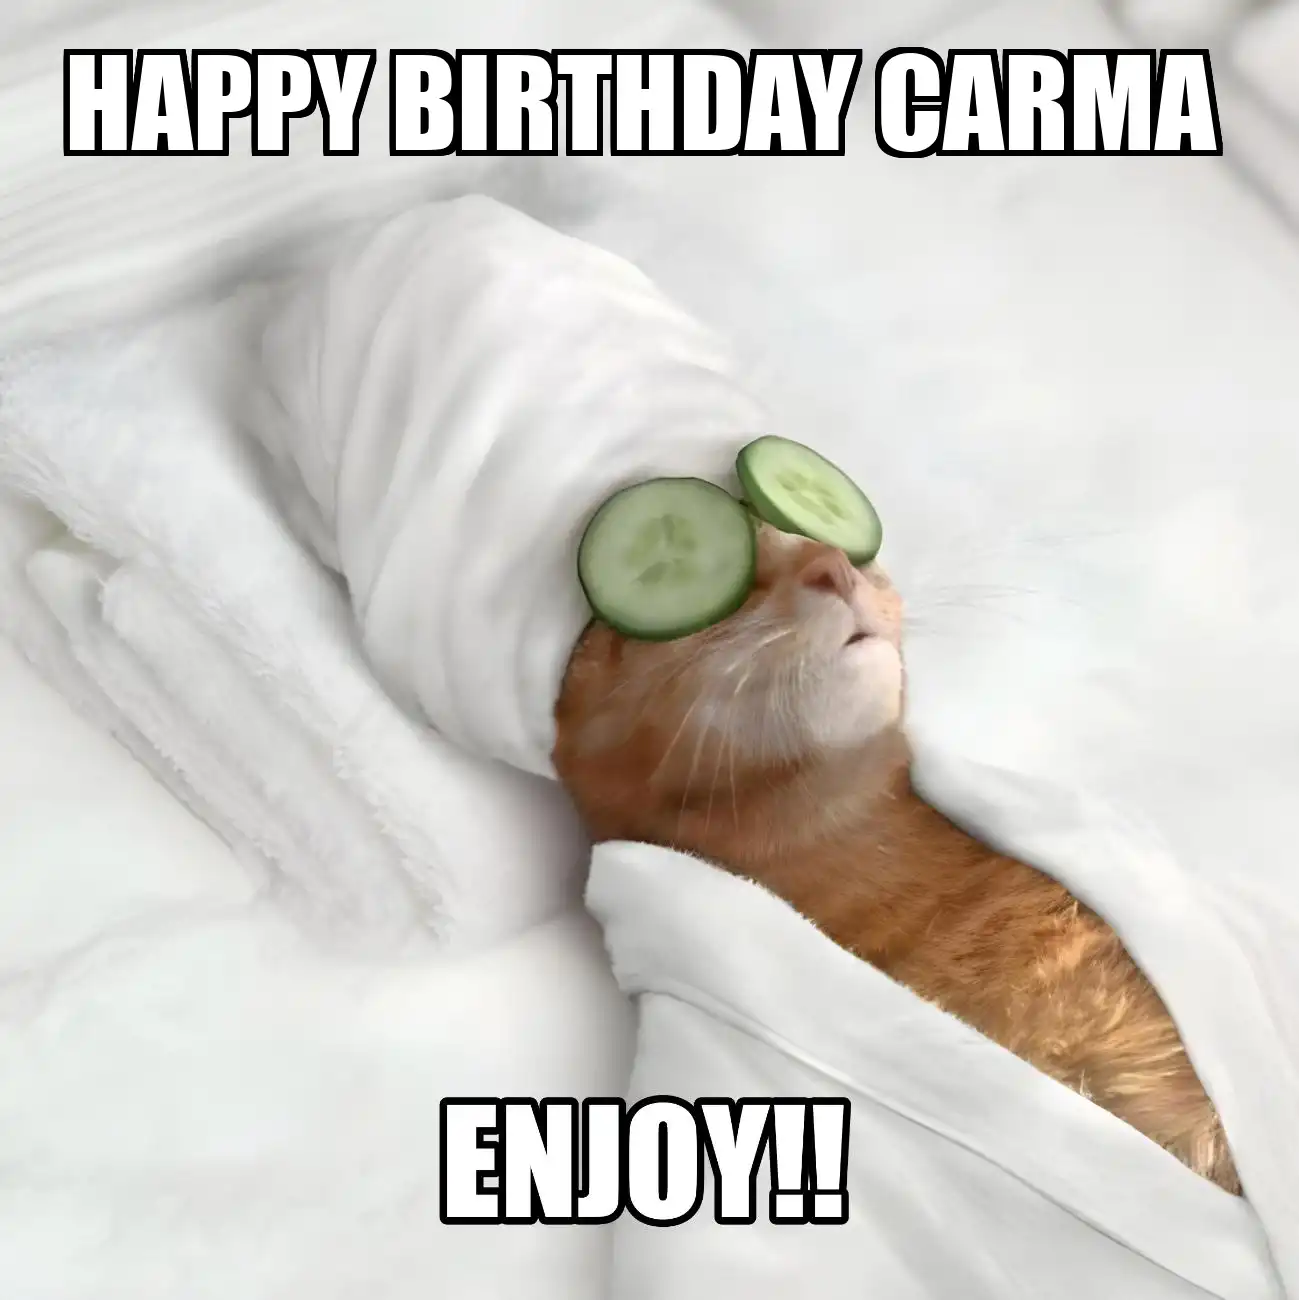 Happy Birthday Carma Enjoy Cat Meme